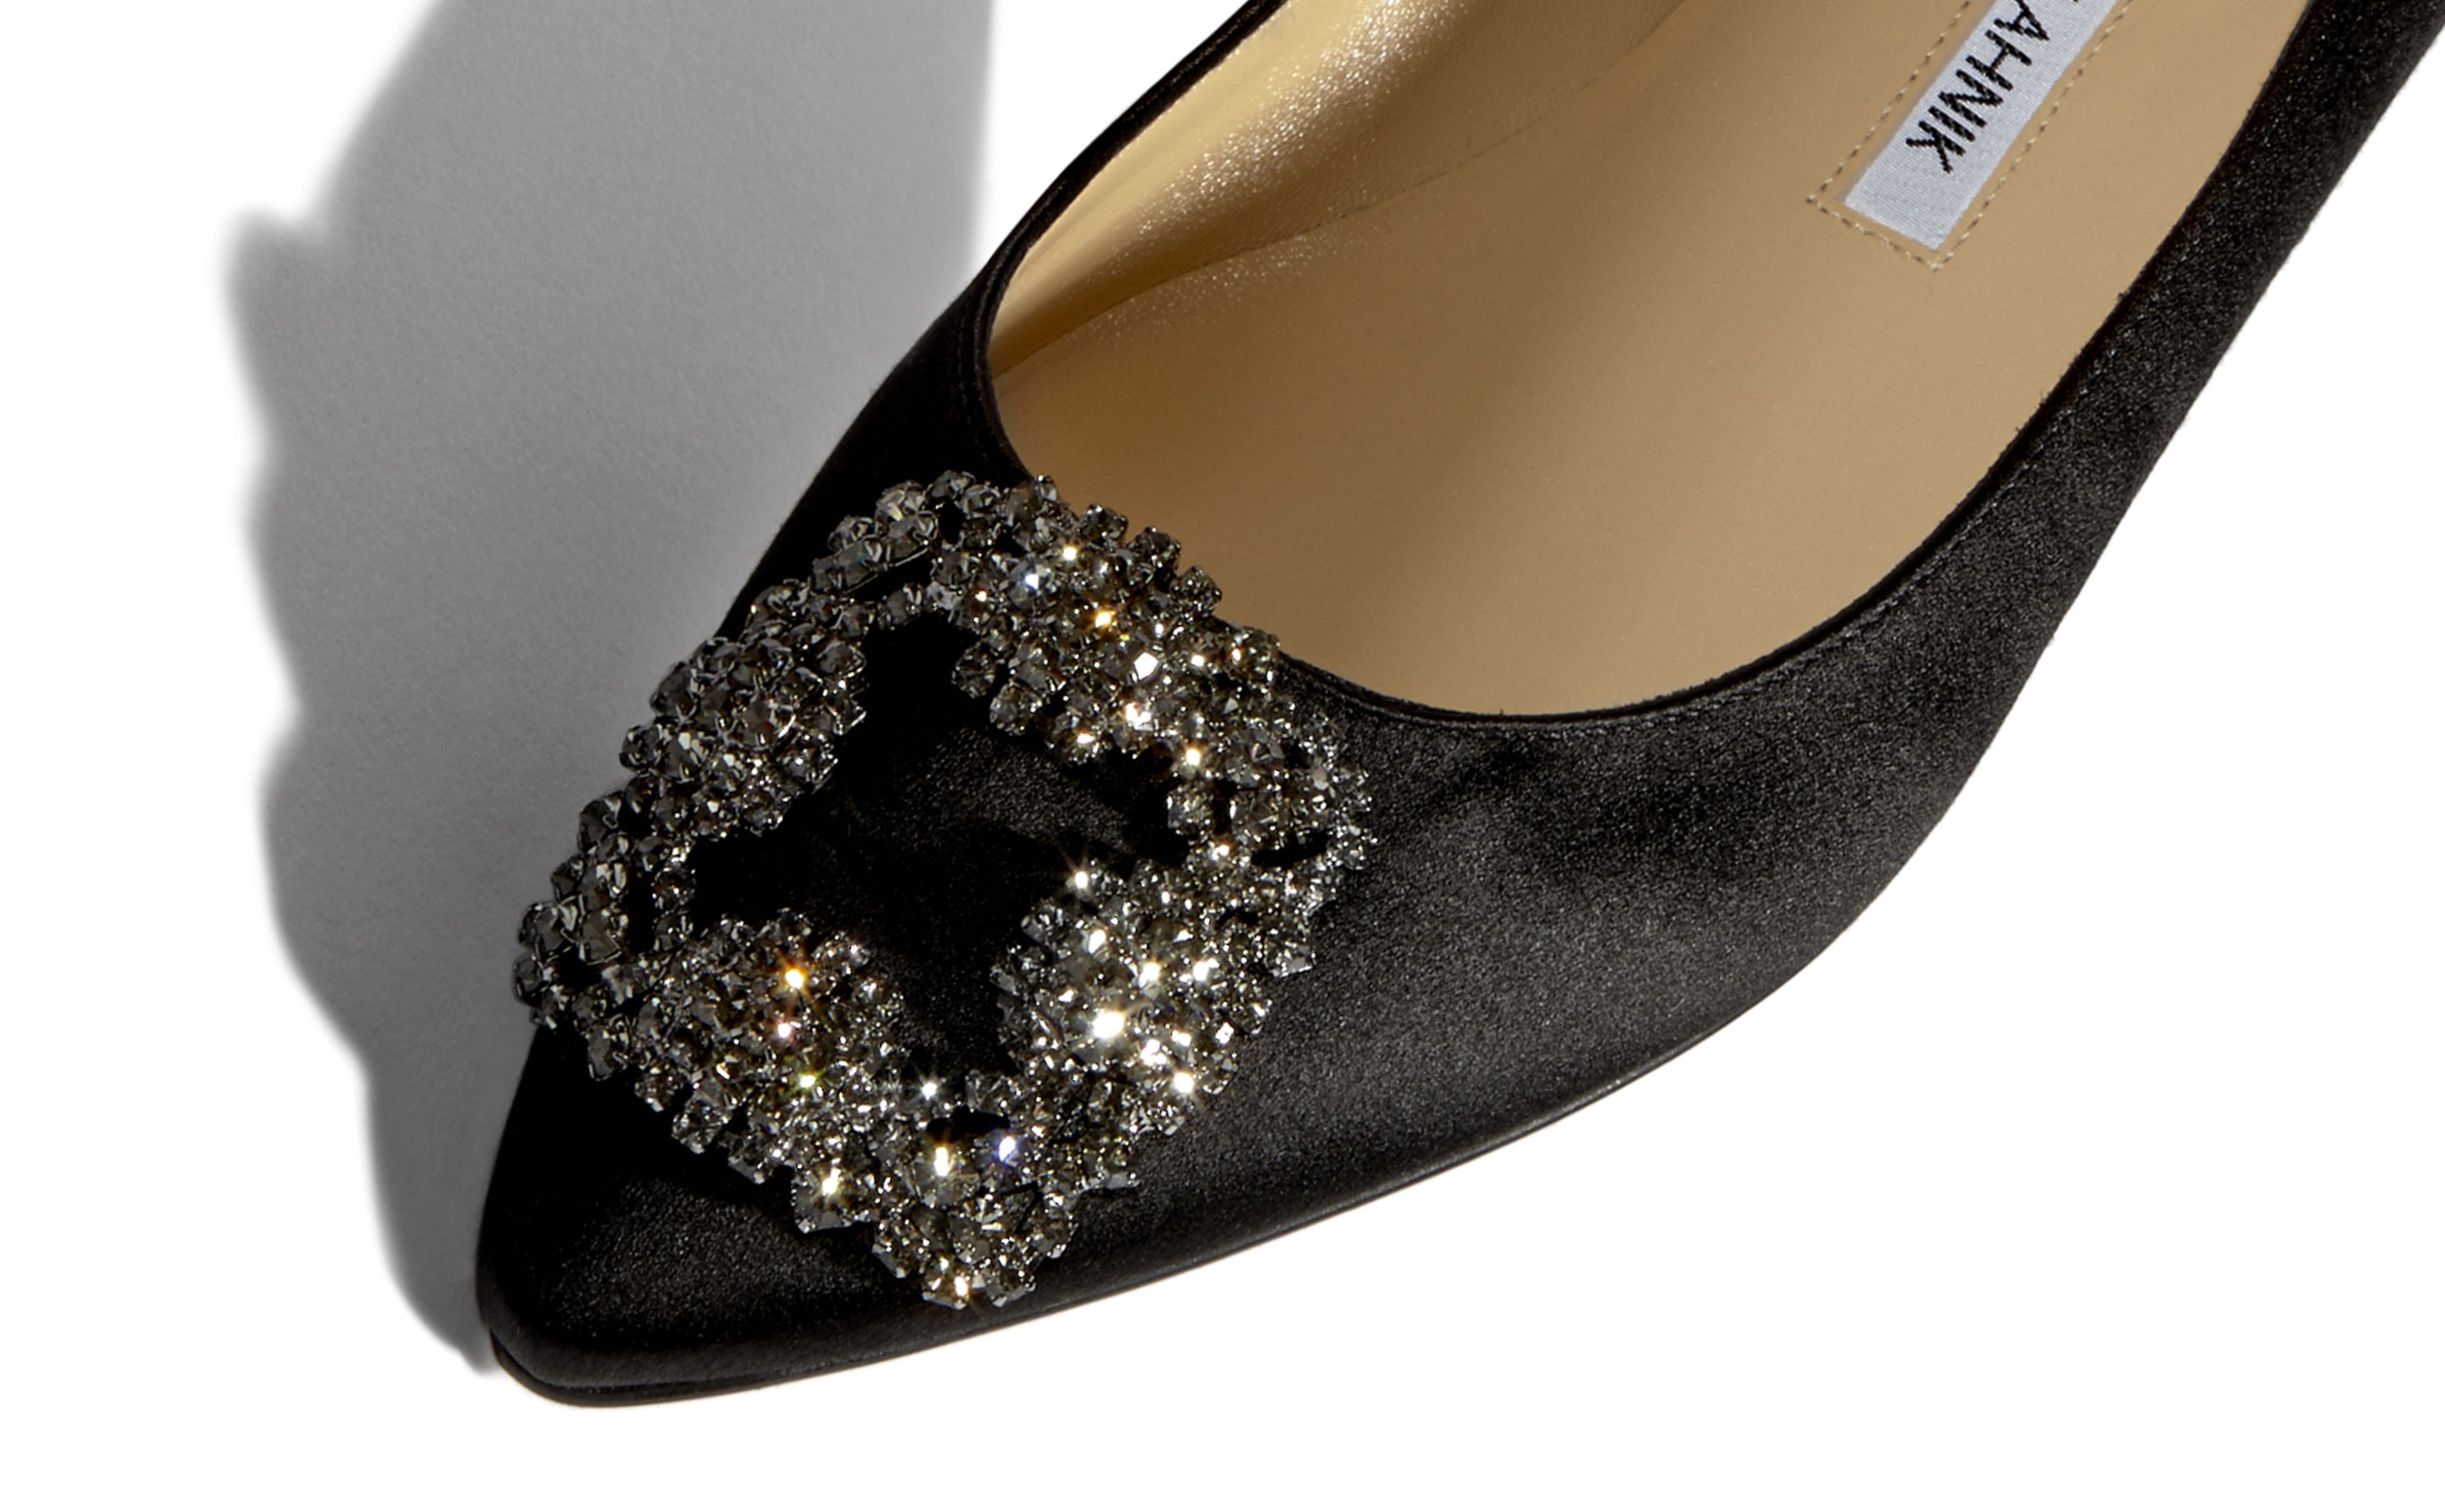 Details about   $1245 New Manolo Blahnik TRIONFAFLAT Satin Black Flats Crystal Jewel BB Shoes 41